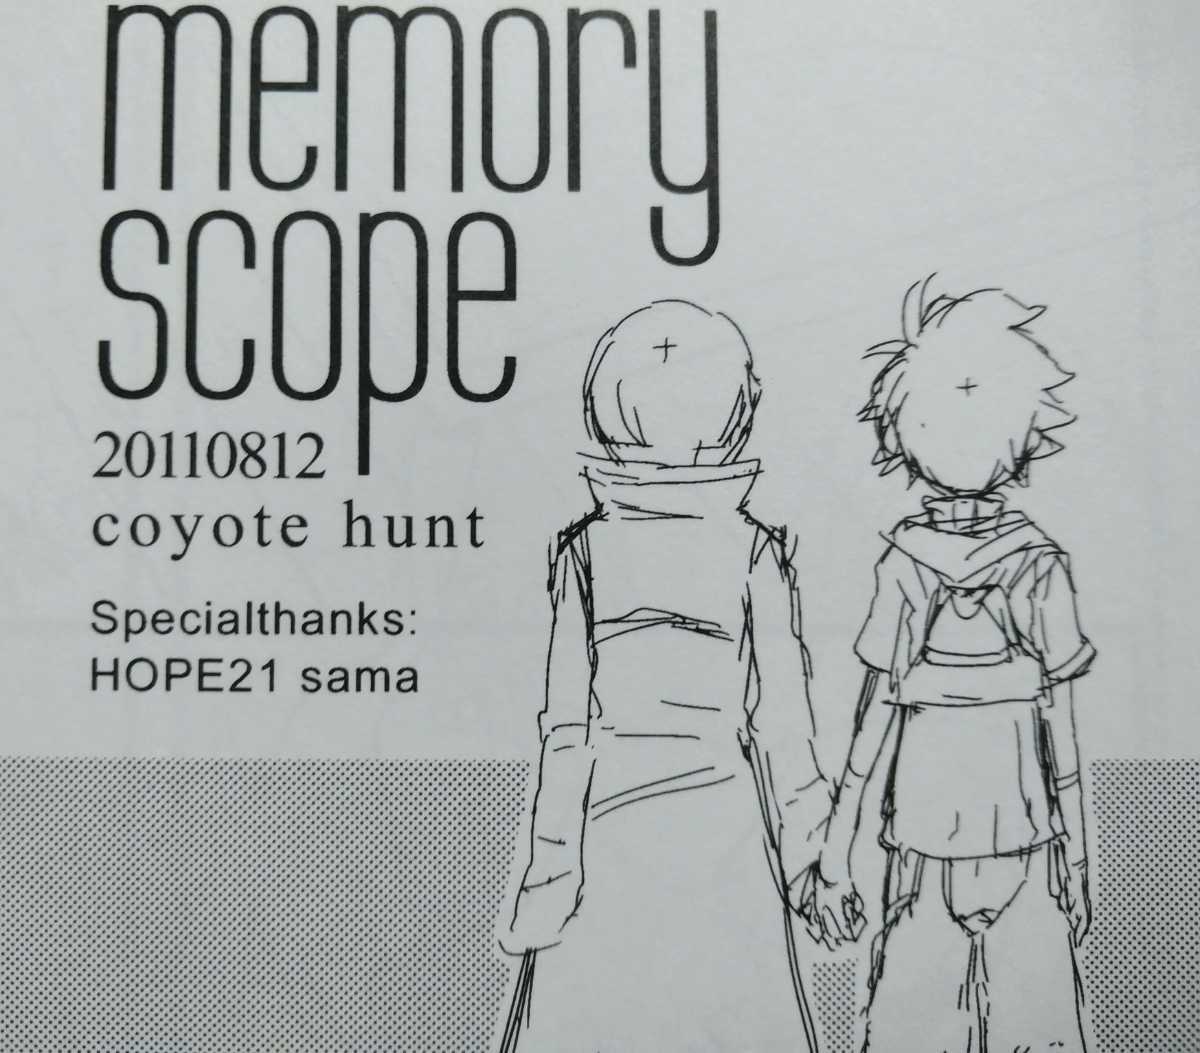 【SALE★5月6日まで】memory scope Ragnarok online fanbook 2011年8月12日 coyote hunt 34ページ